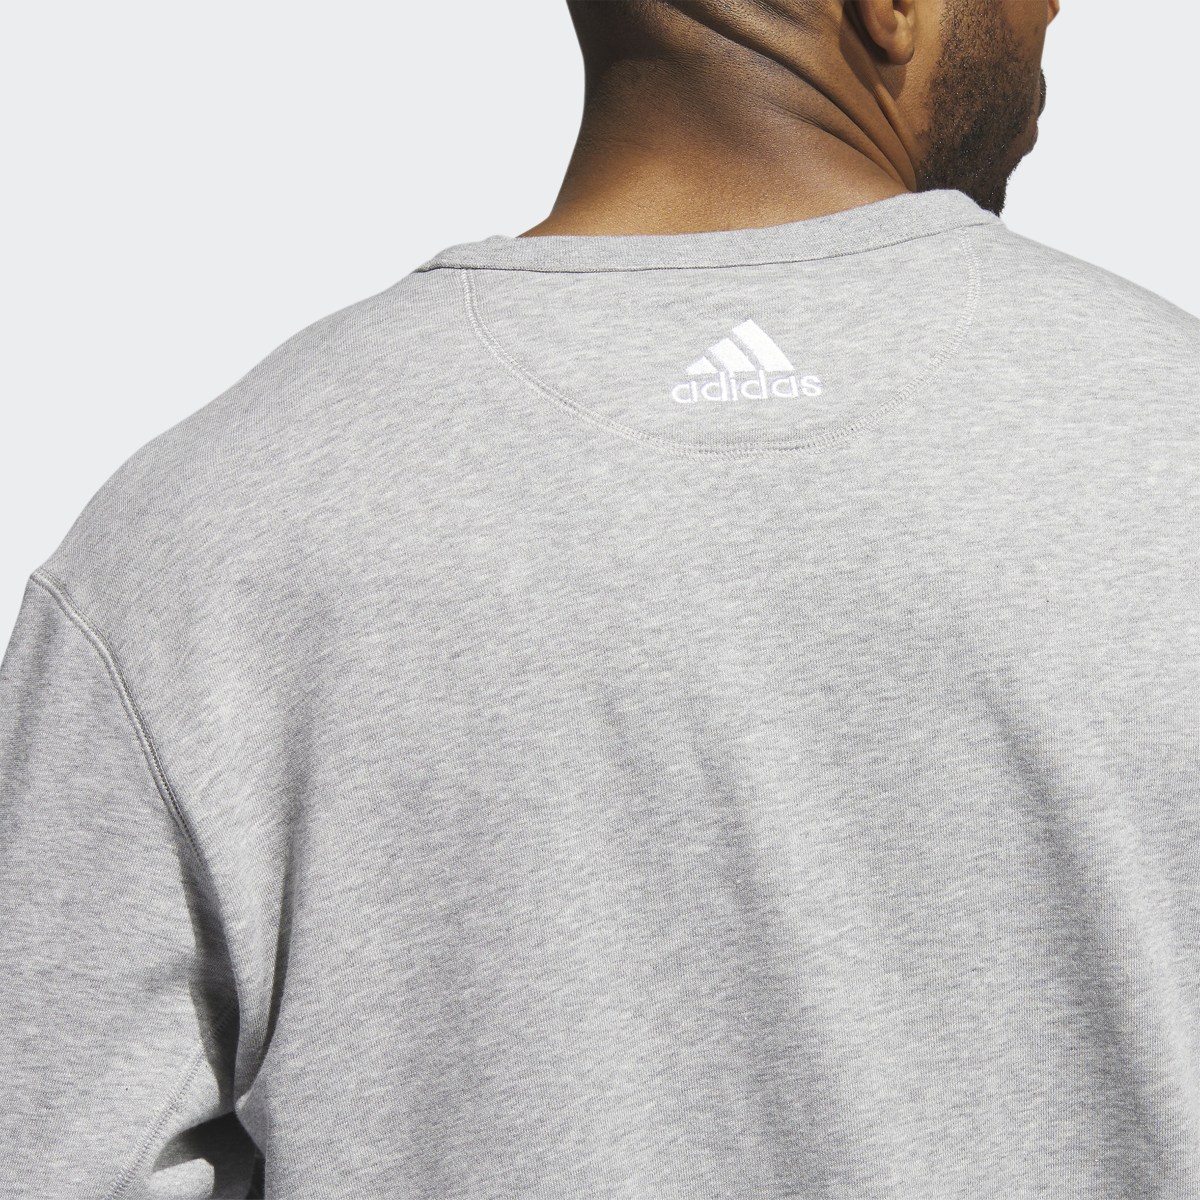 Adidas Capitals Vintage Crew Sweatshirt. 7